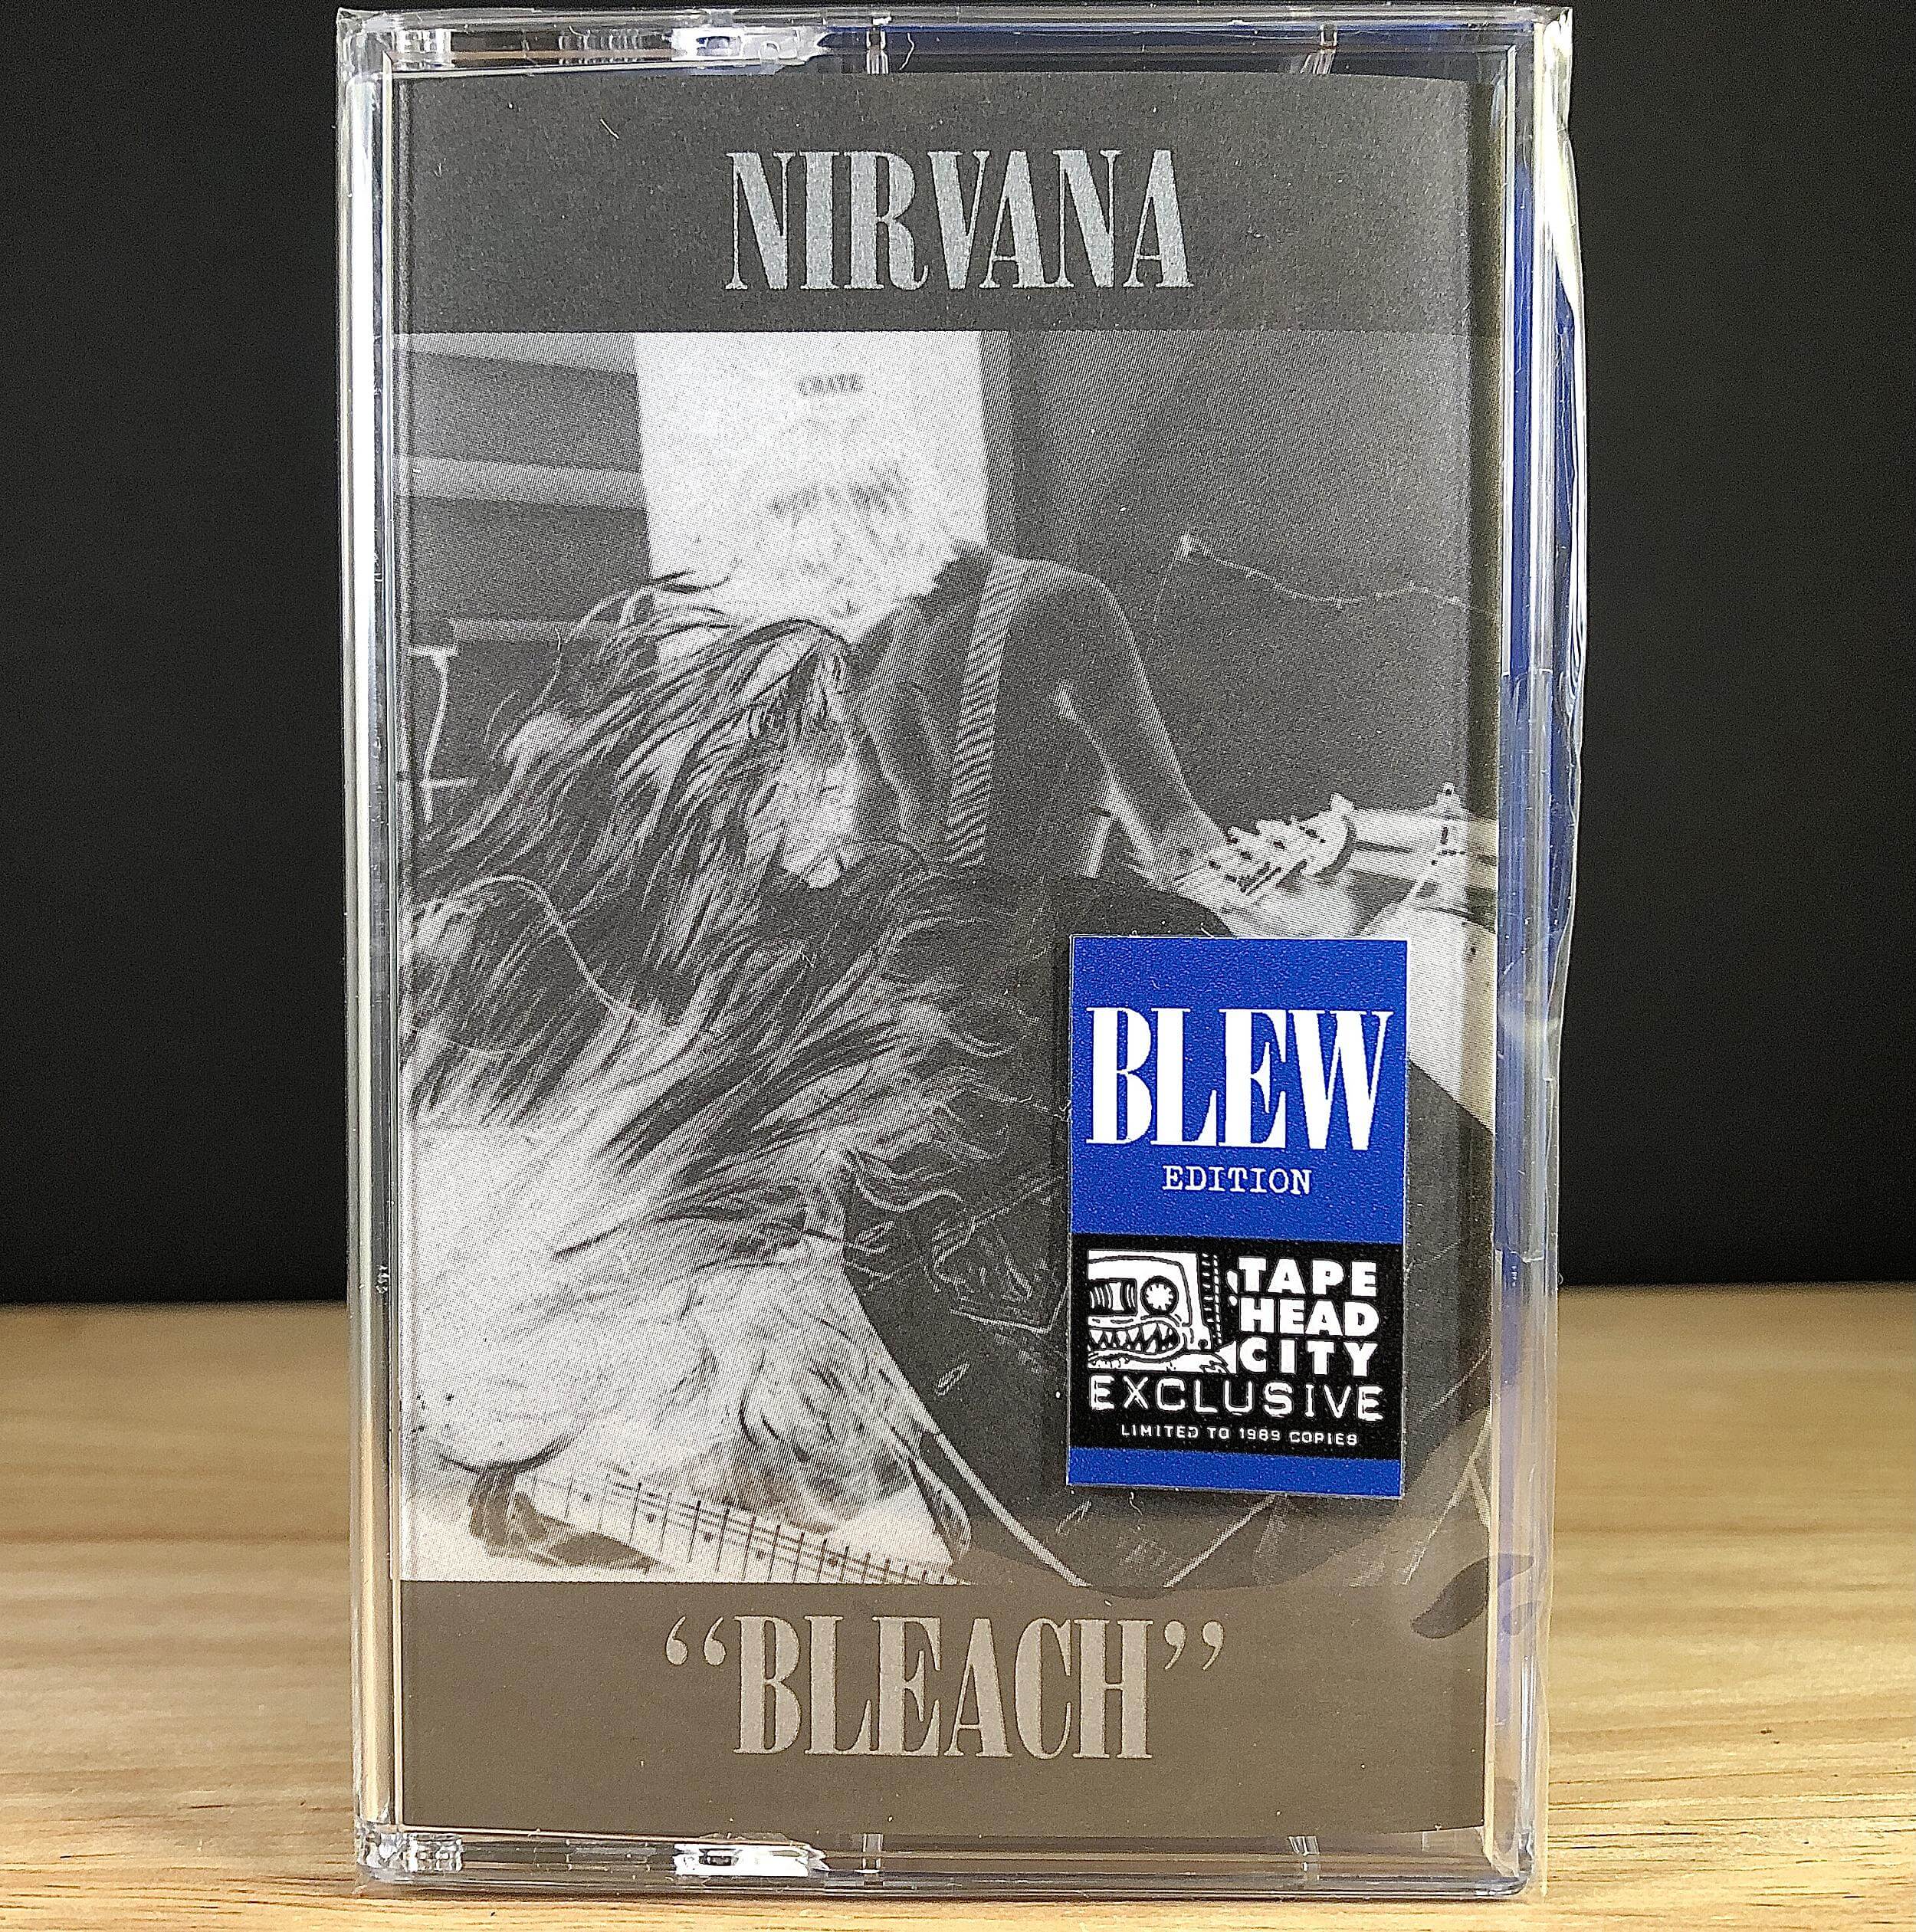 "Bleach", do Nirvana, em fita K7 azul